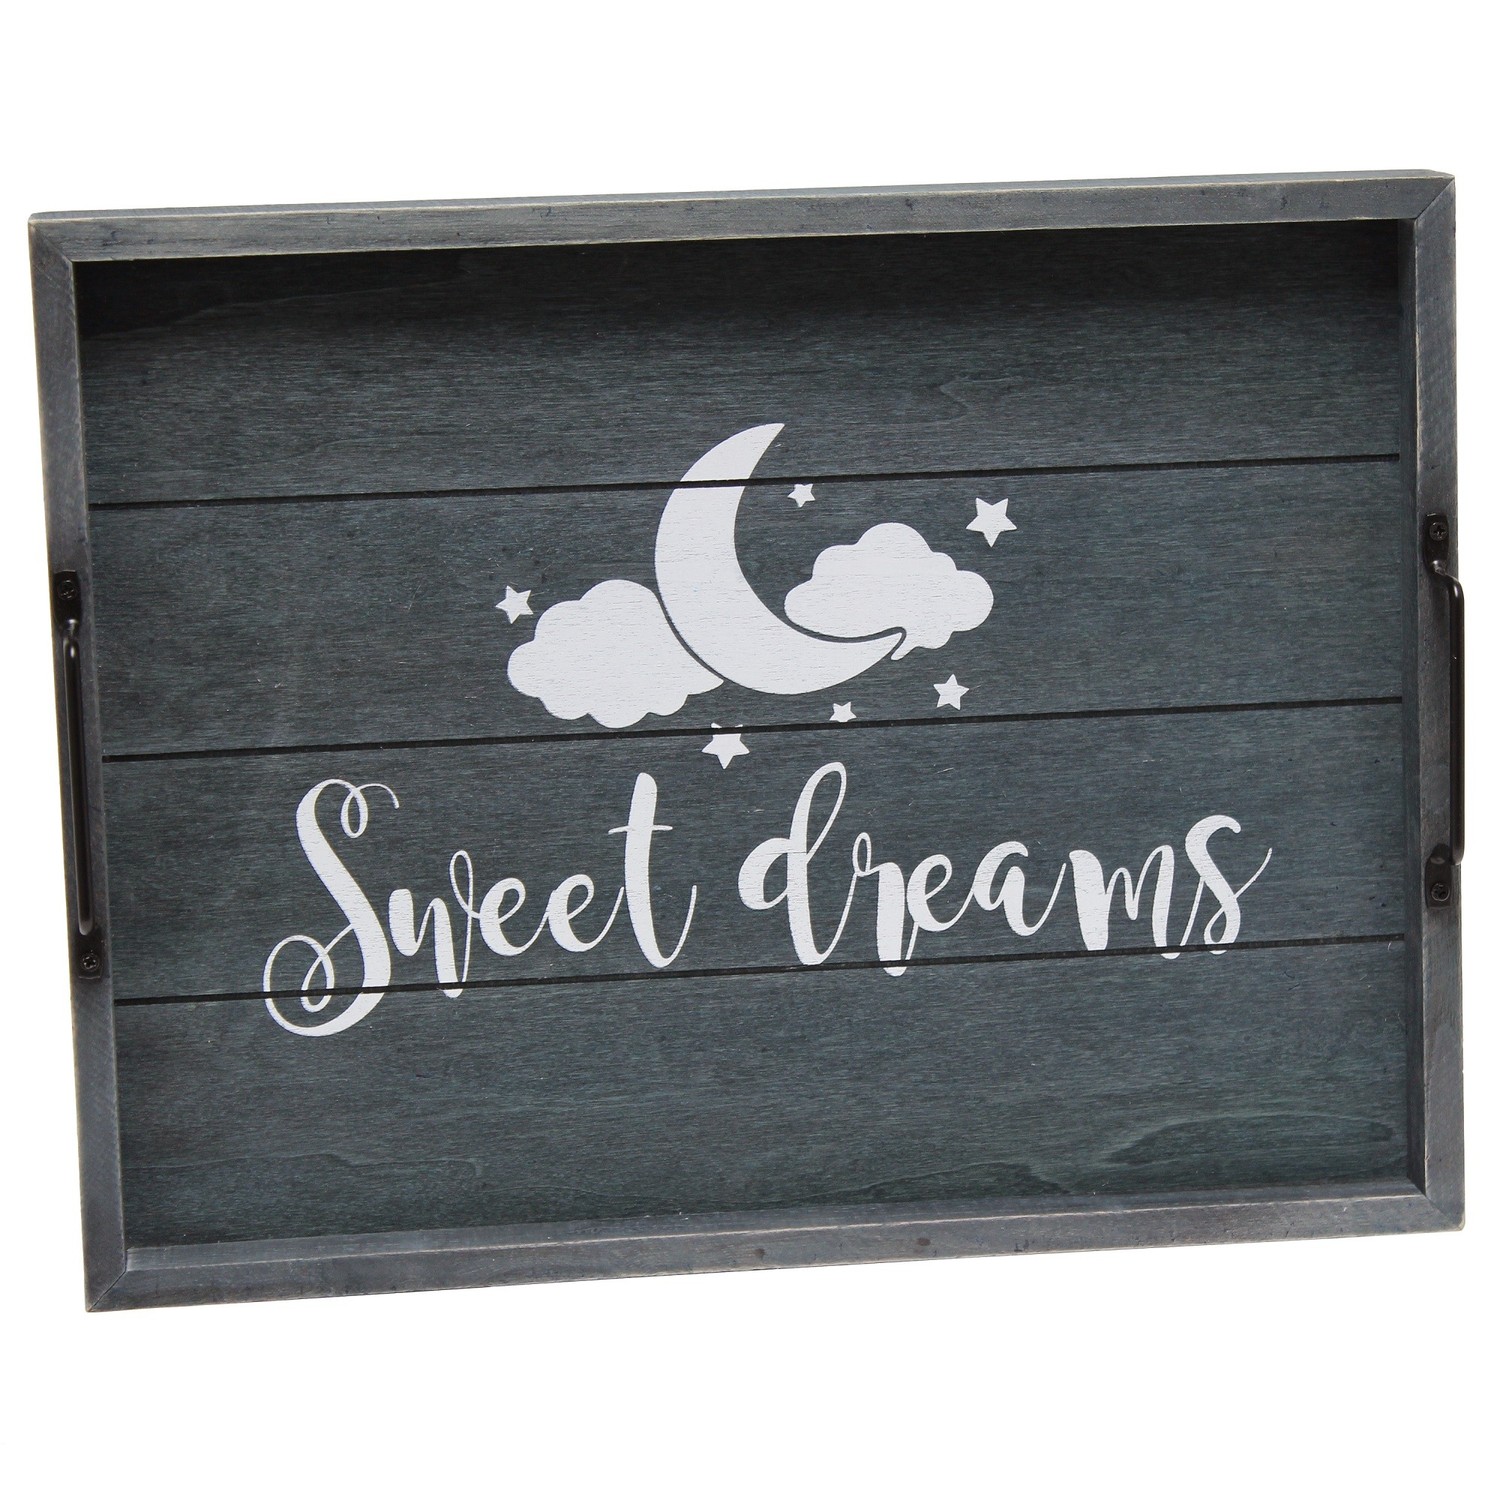 Elegant Designs Decorative Wood Serving Tray w/ Handles, 15.50" x 12", "Sweet Dreams"